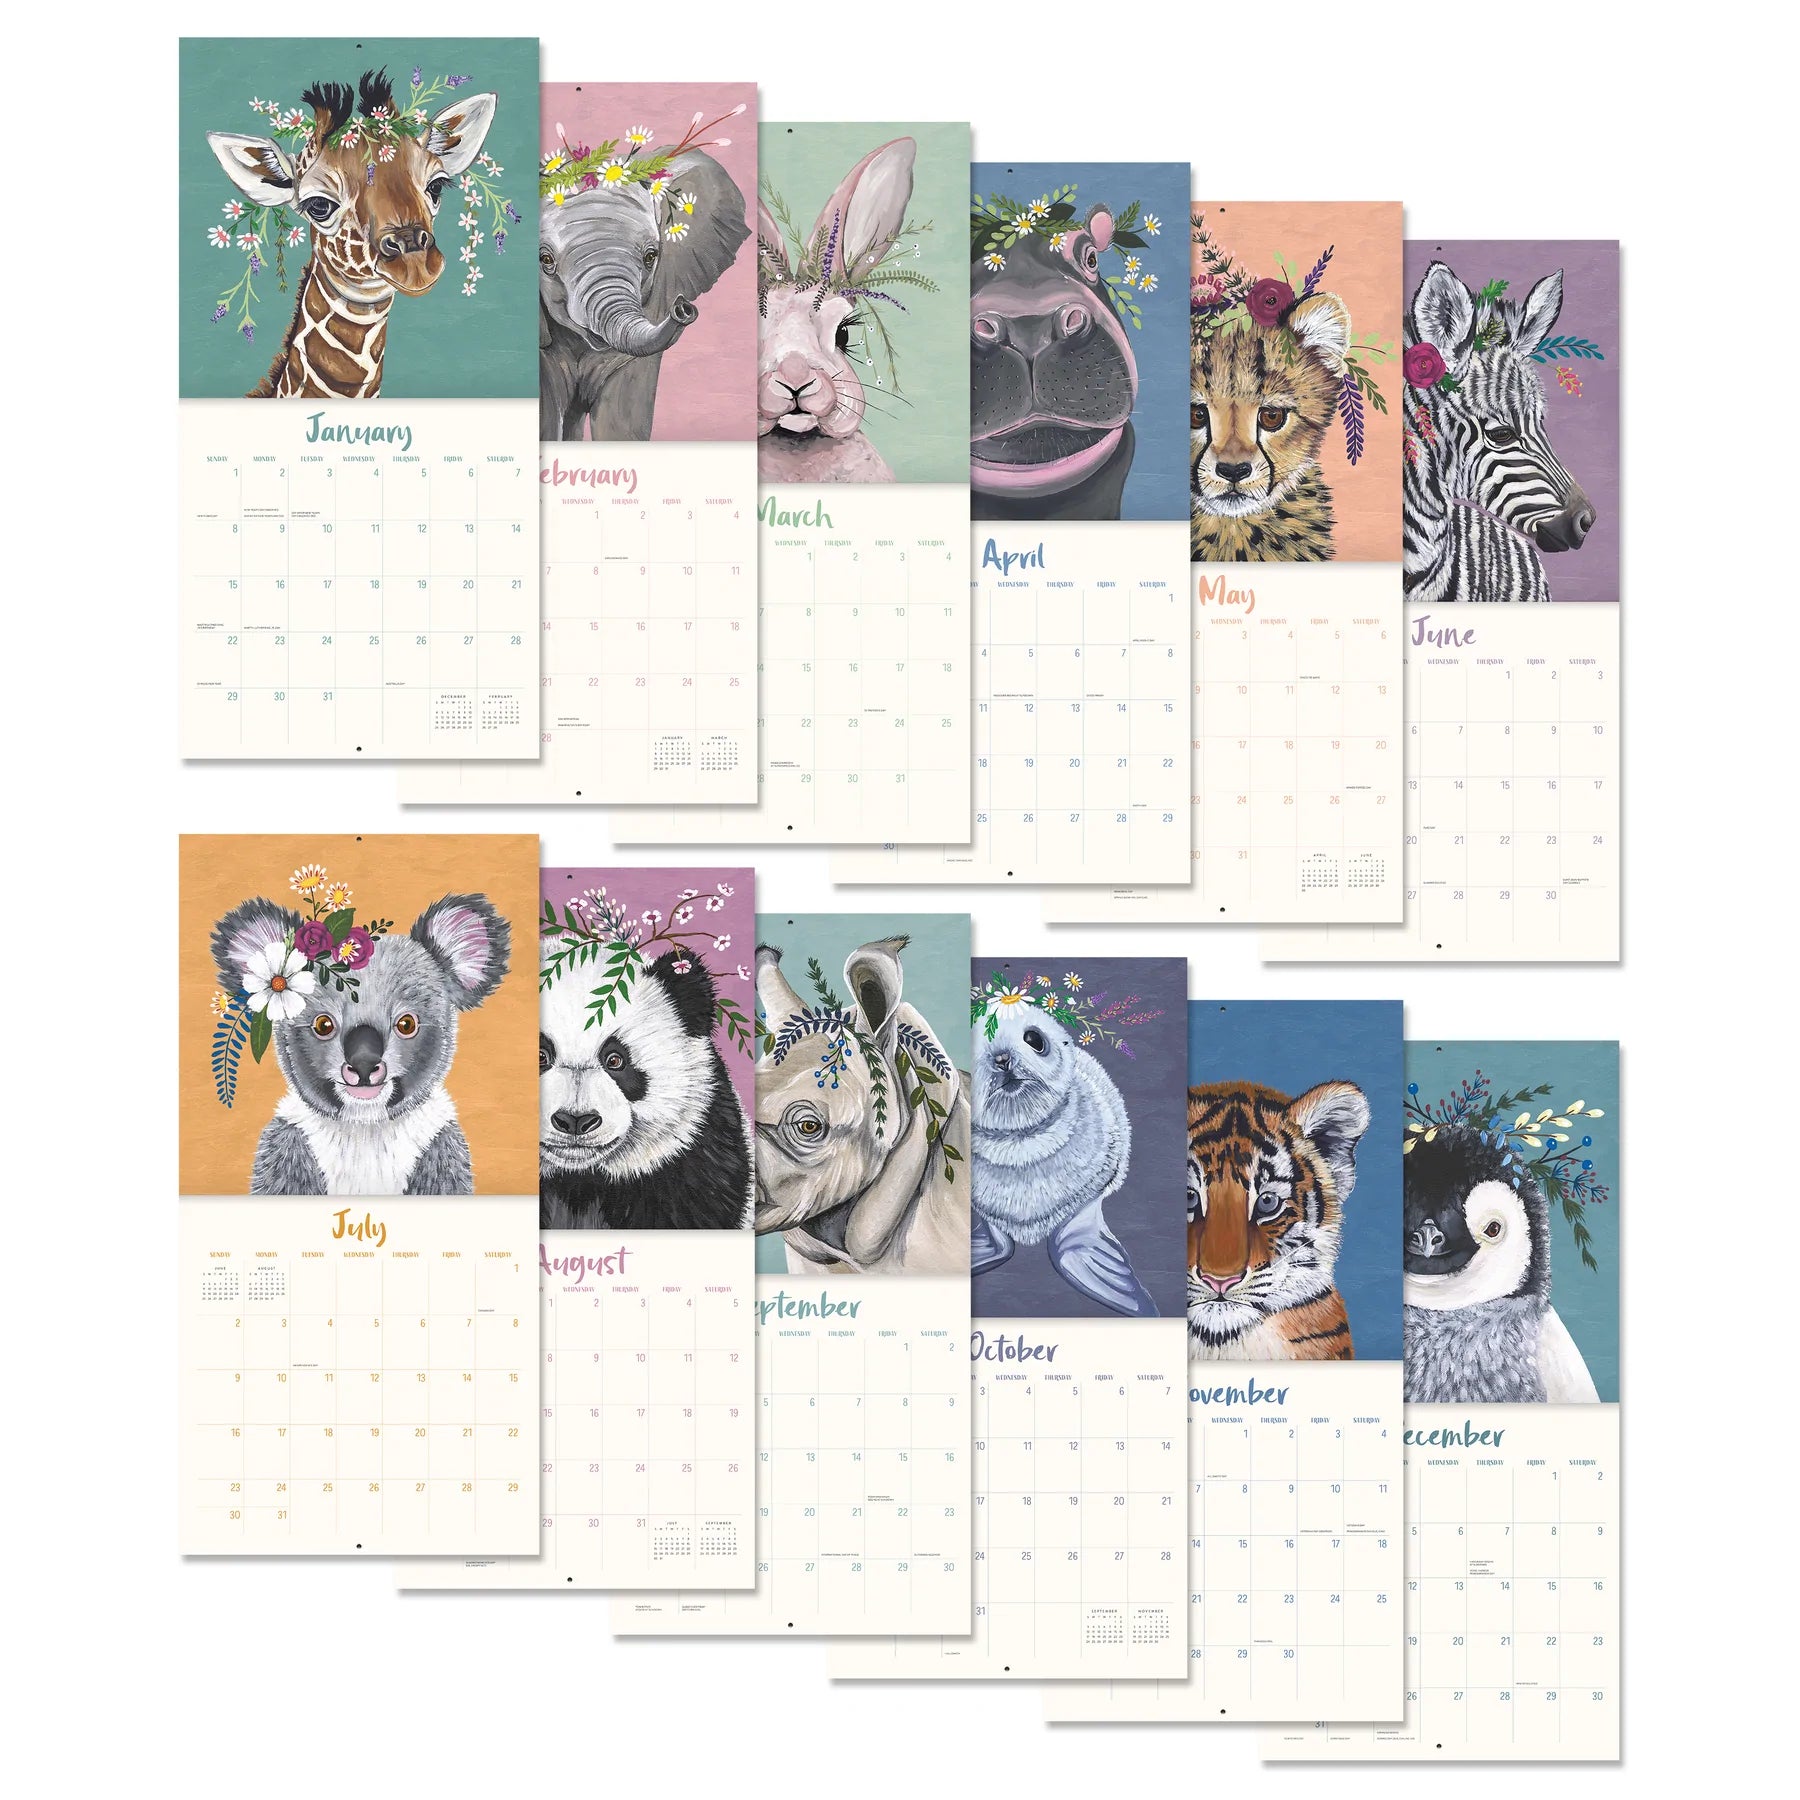 2023 Boho Animals by Spring Whitaker - Square Wall Calendar